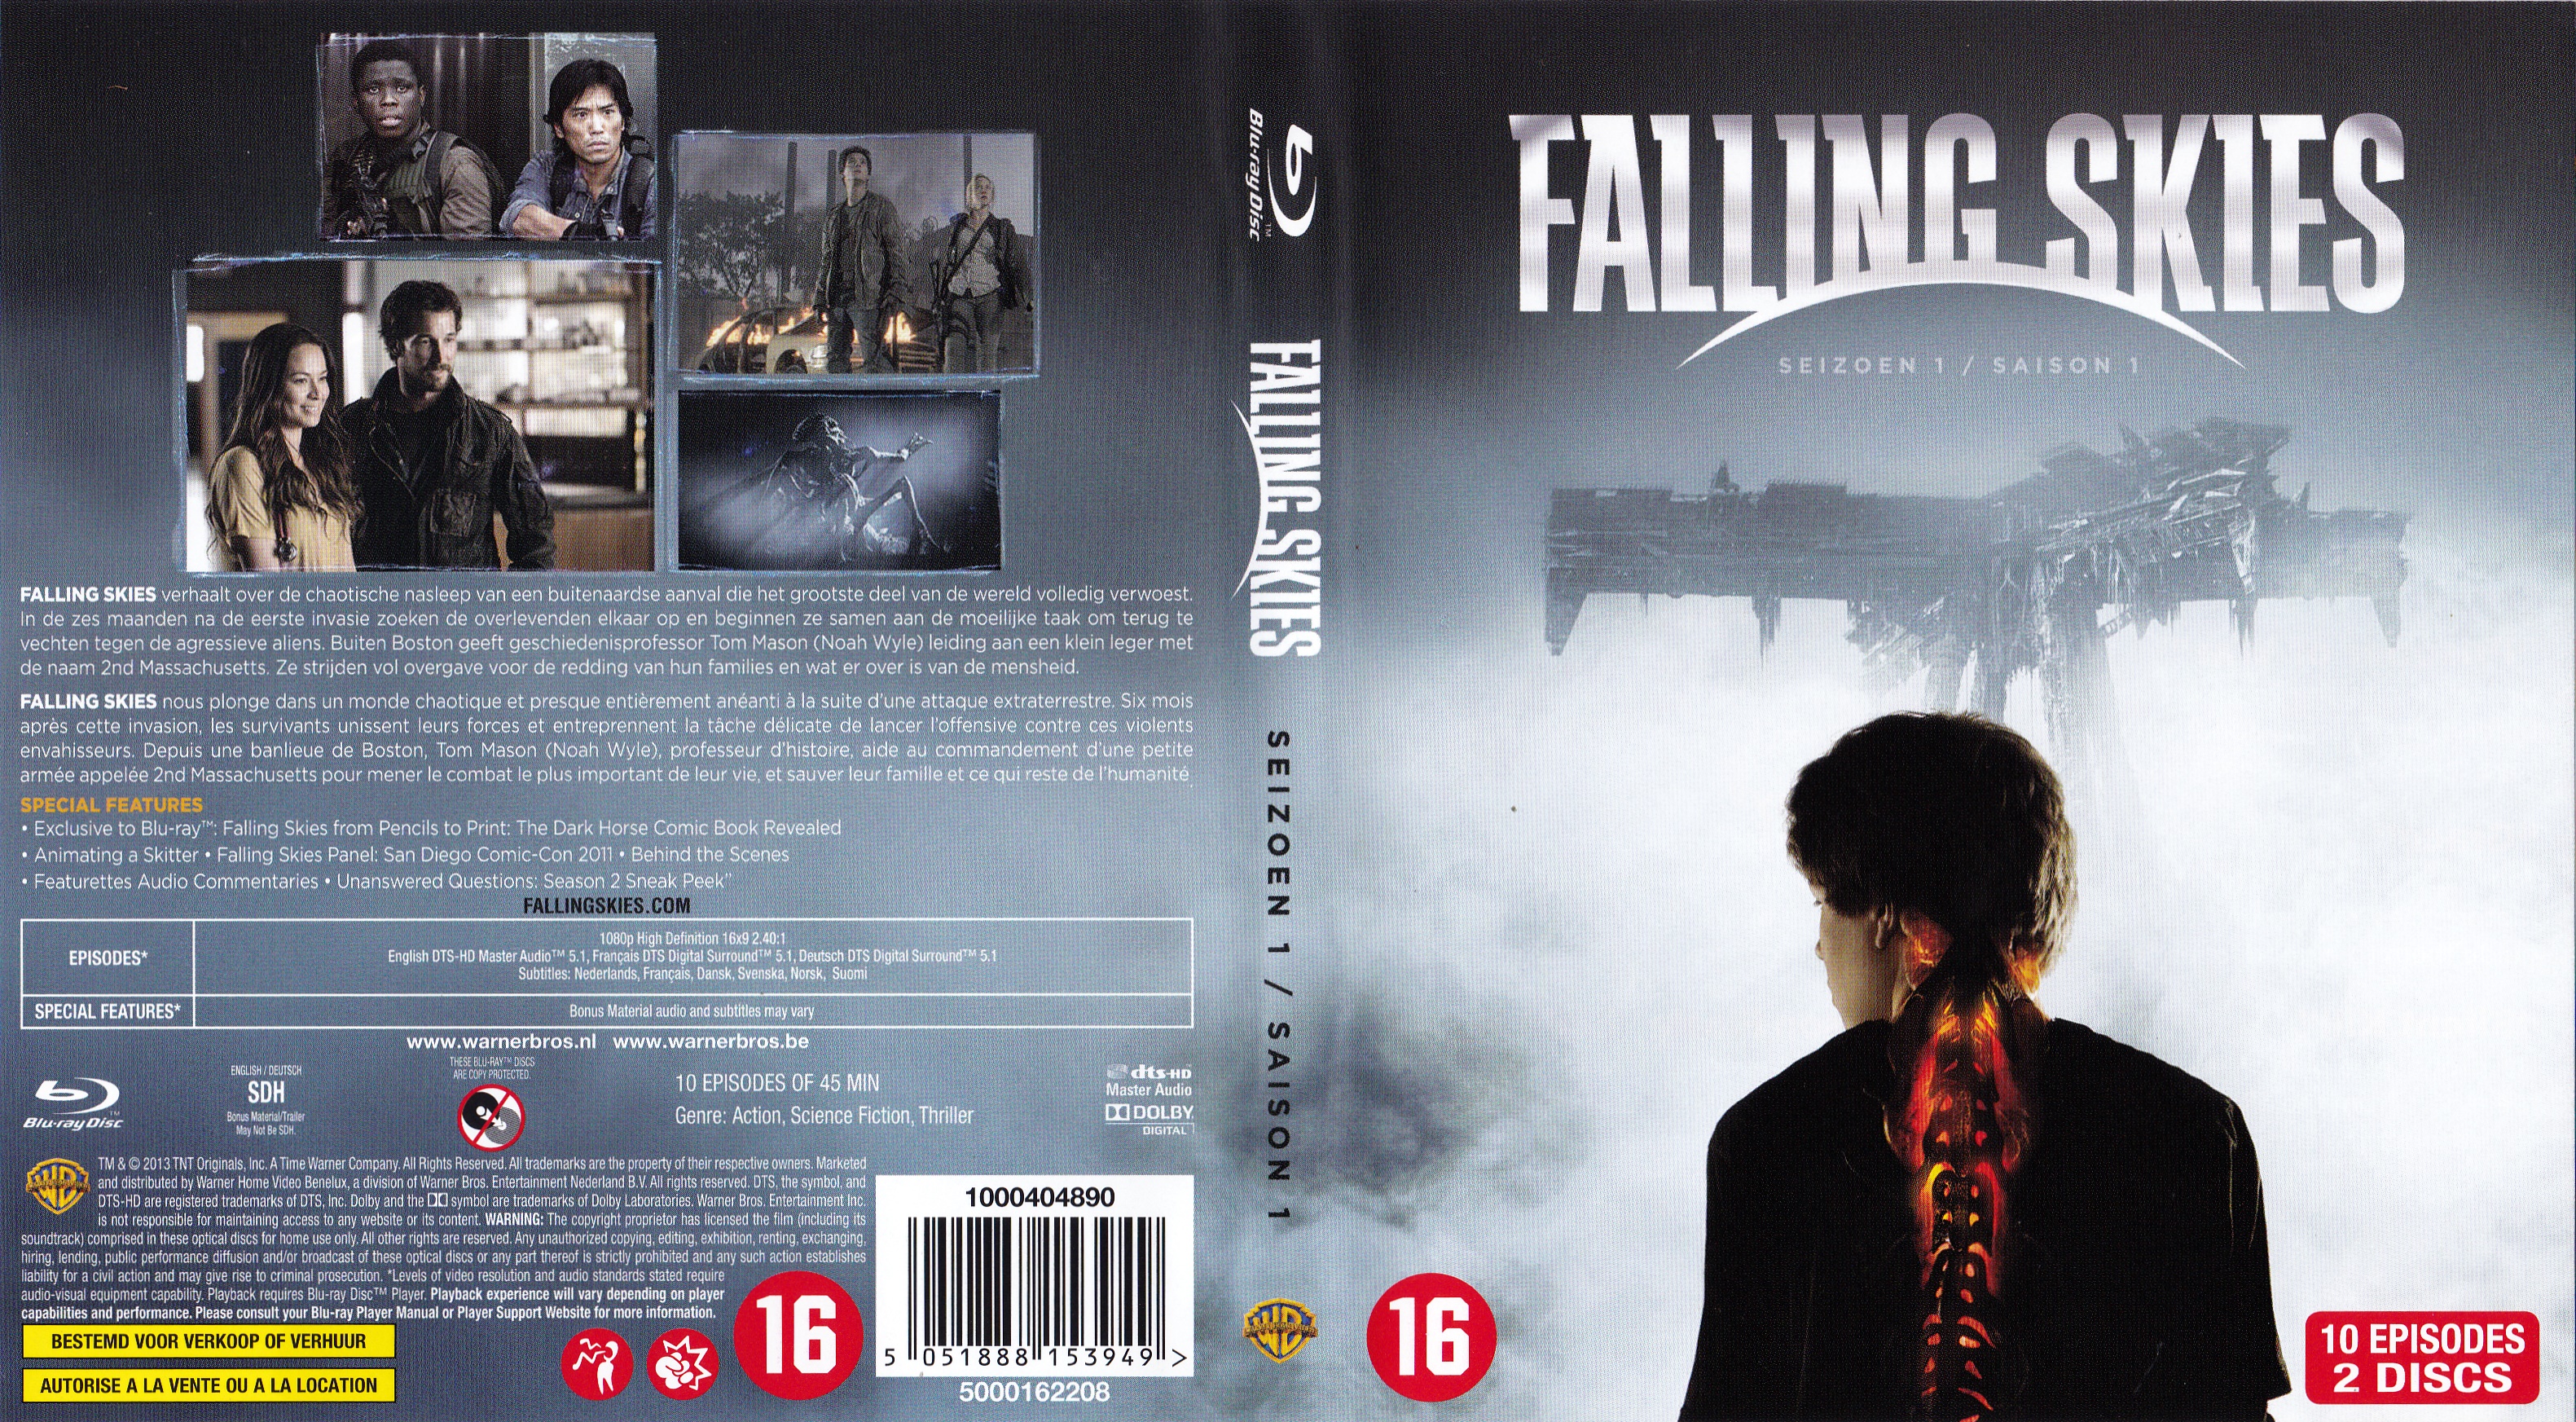 Jaquette DVD Falling Skies Saison 1 (BLU-RAY)